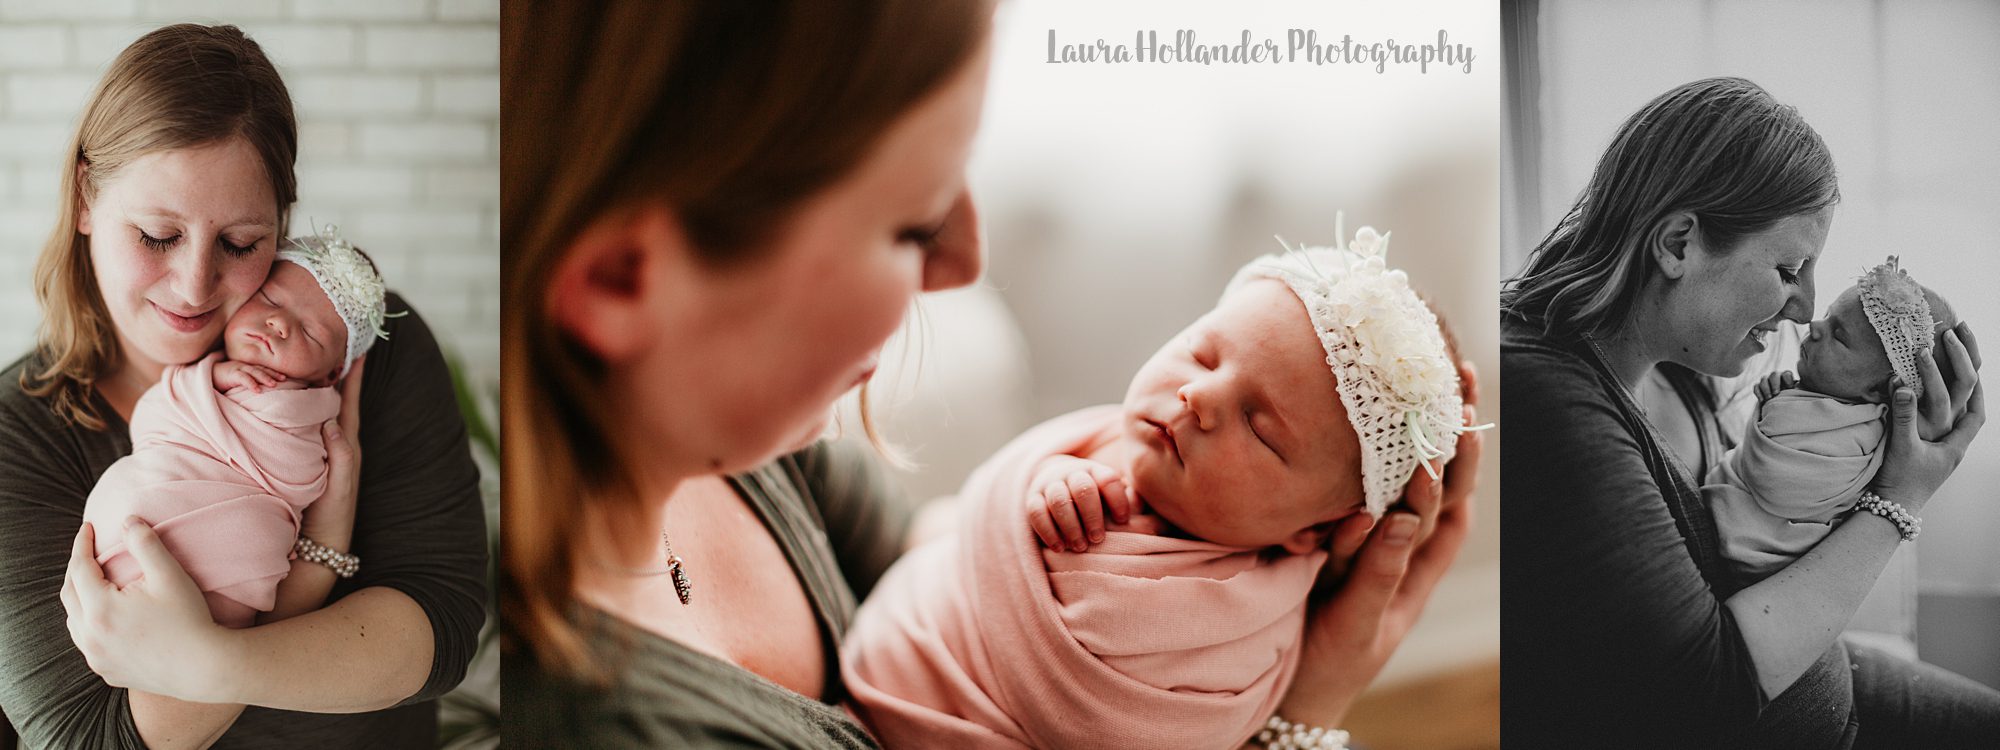 mom and newborn baby girl, studio portrait, laura hollander photography in Battle Creek, MI